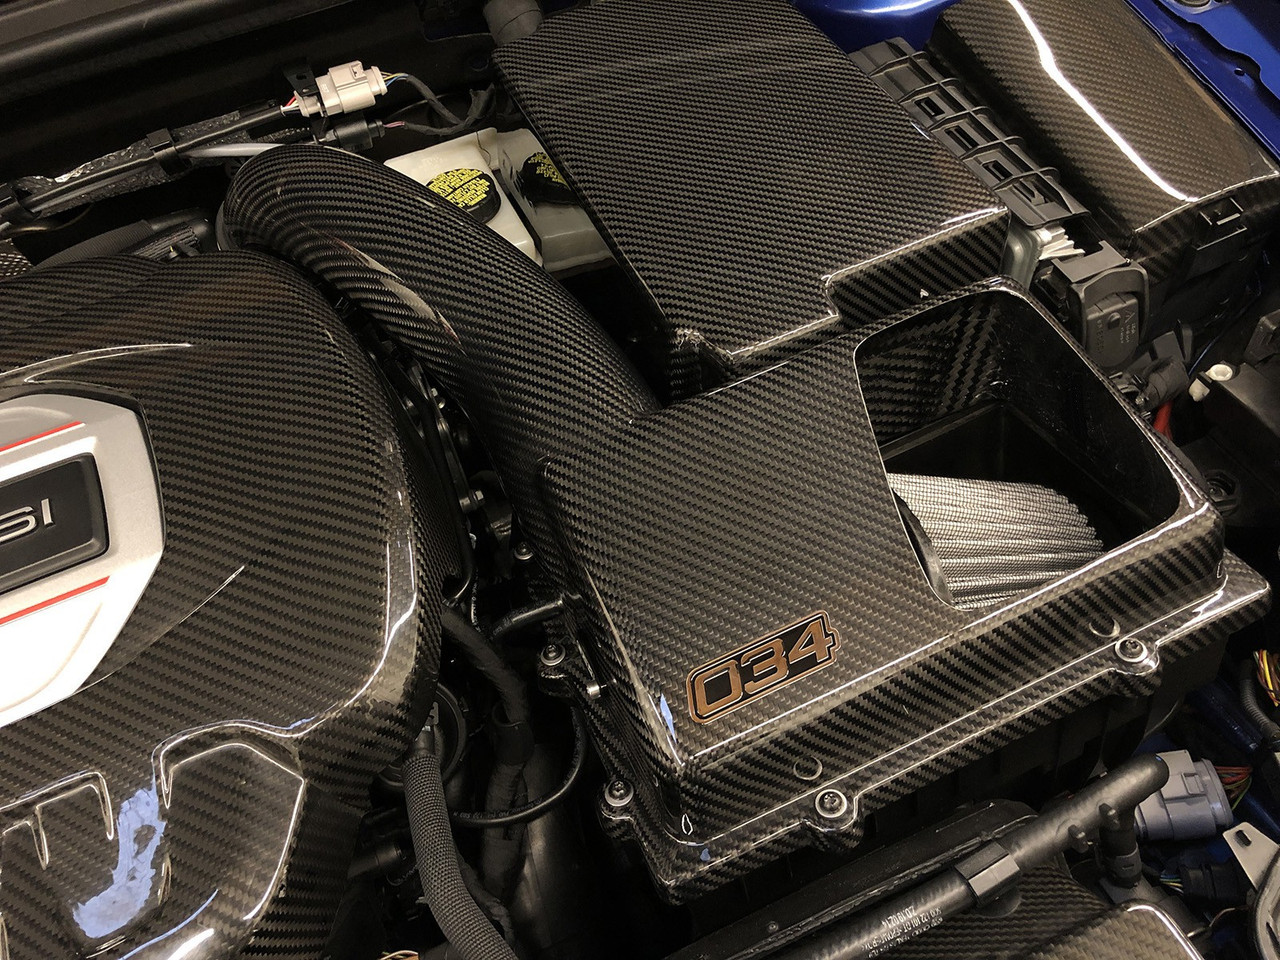 034Motorsport X34 Carbon Fiber MQB Open Top Cold Air Intake System for 1.8T & 2.0T MQB